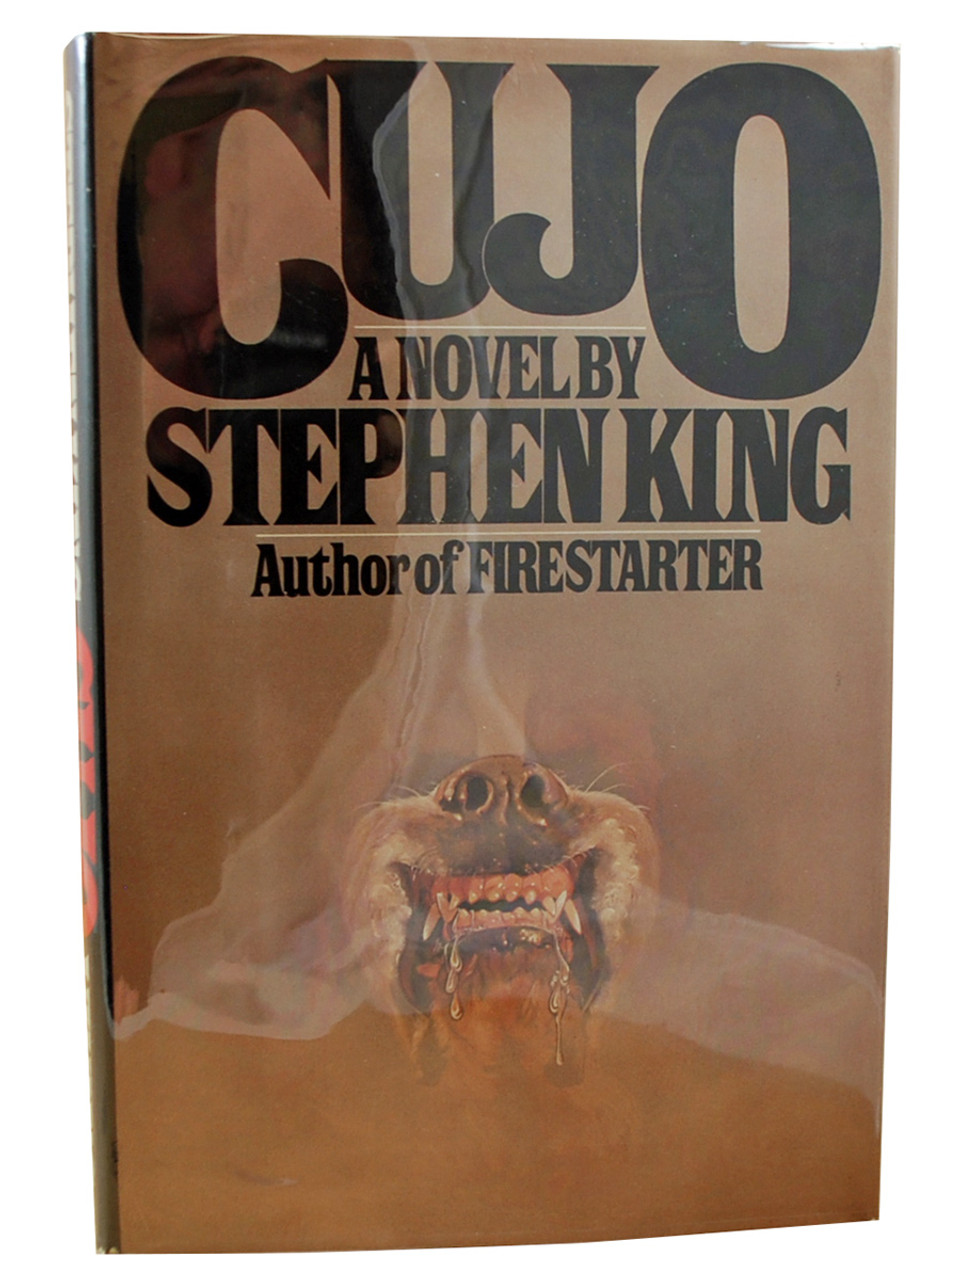 Viking Press 1981, Stephen King "Cujo" dj/HC First Edition, First Printing Slipcased